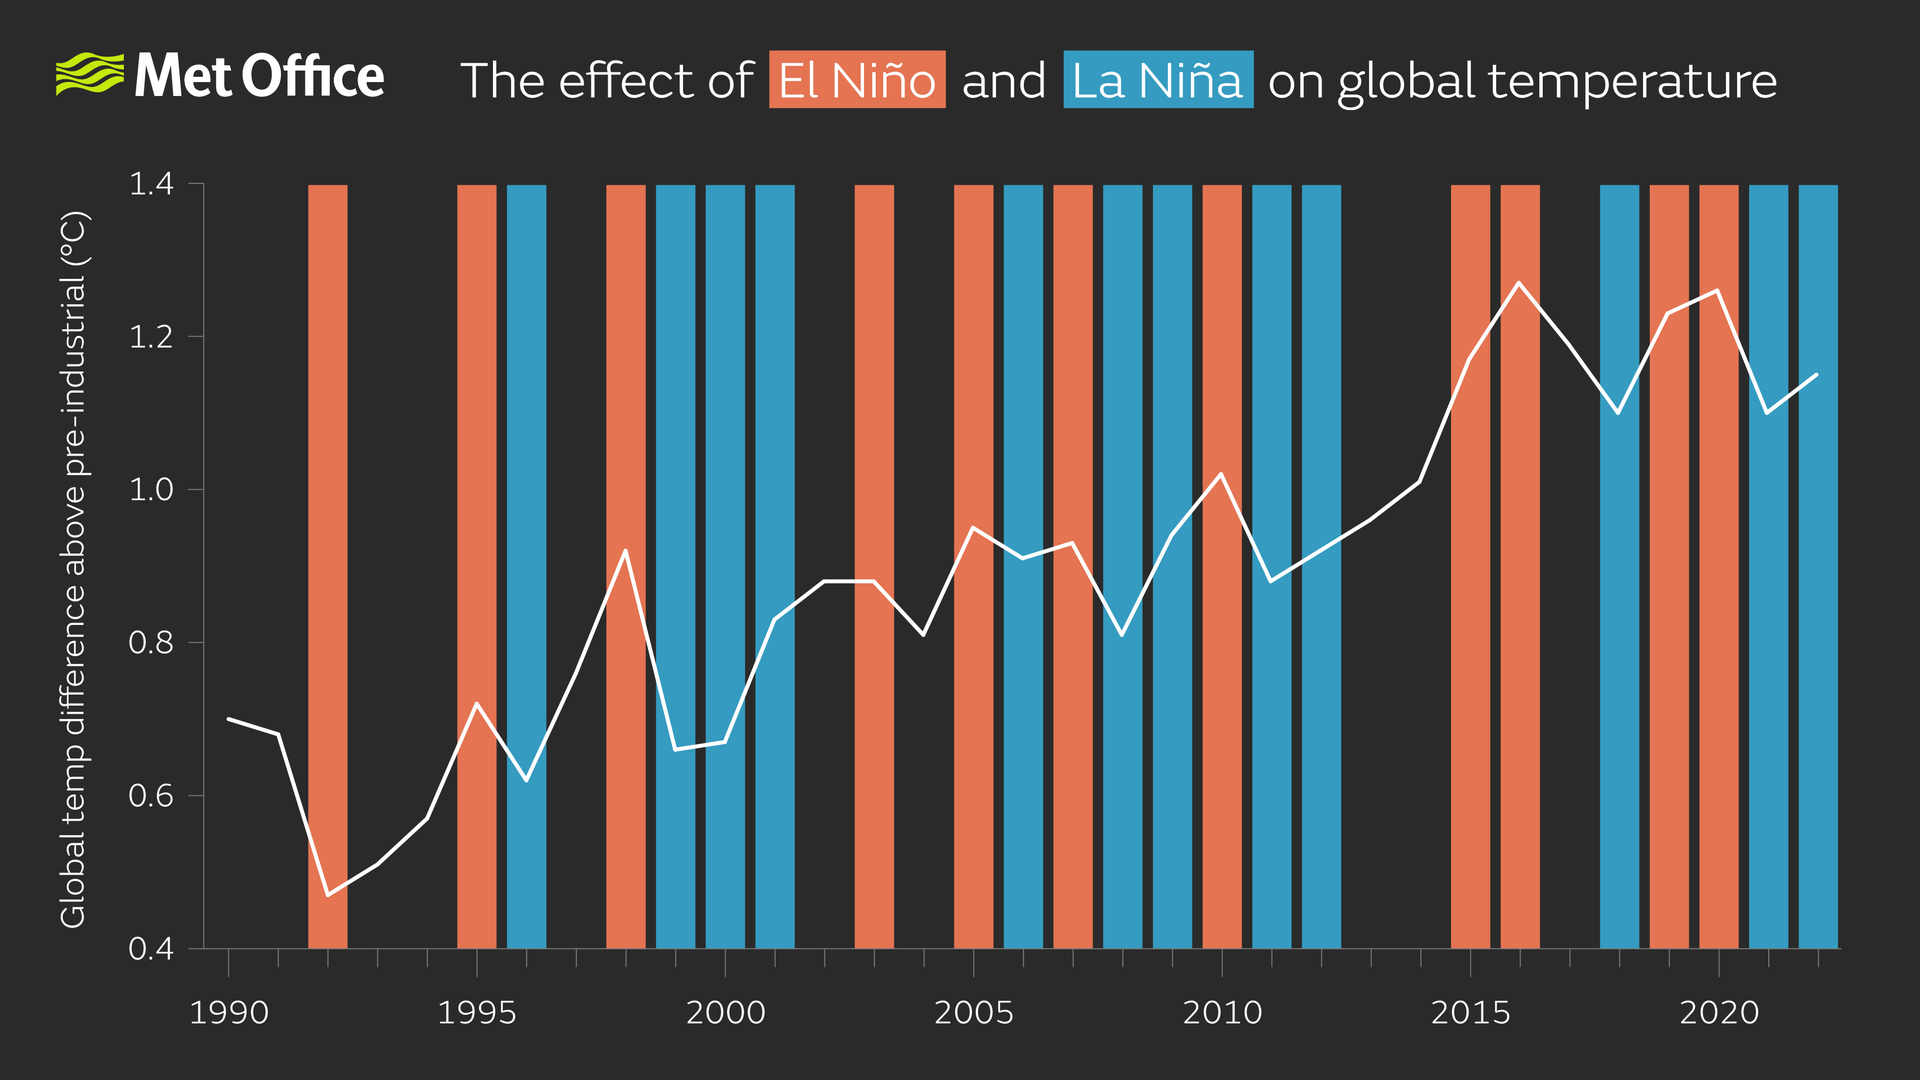 global temperature since 1990 with El Nino and La Nina years